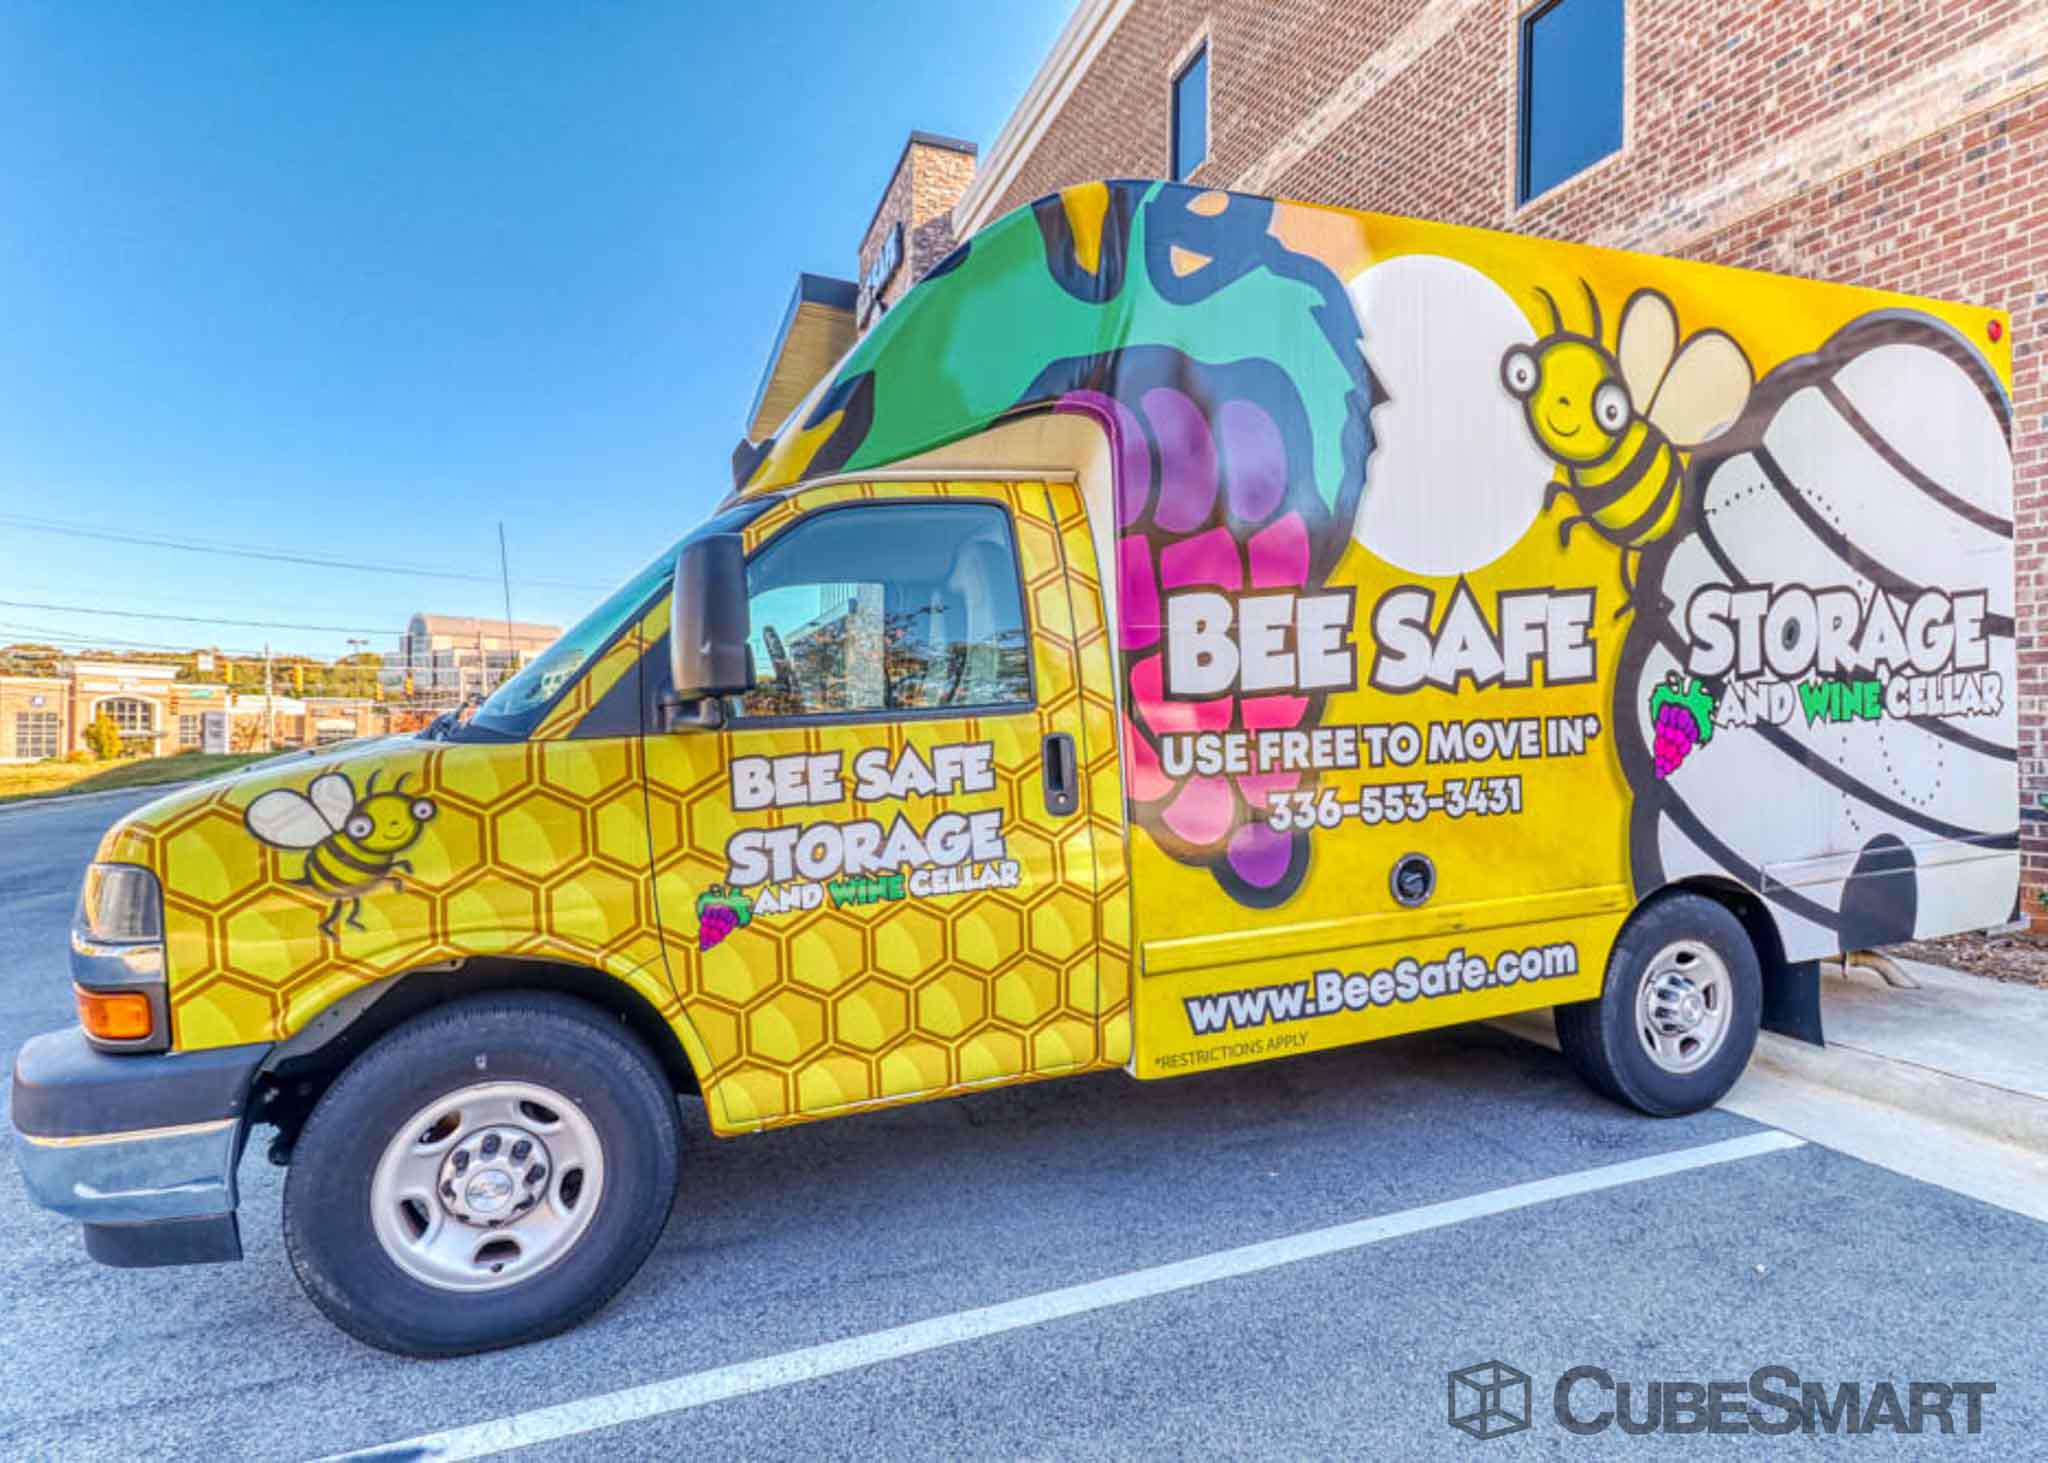 Bee Safe Storage Greensboro (336)553-3431